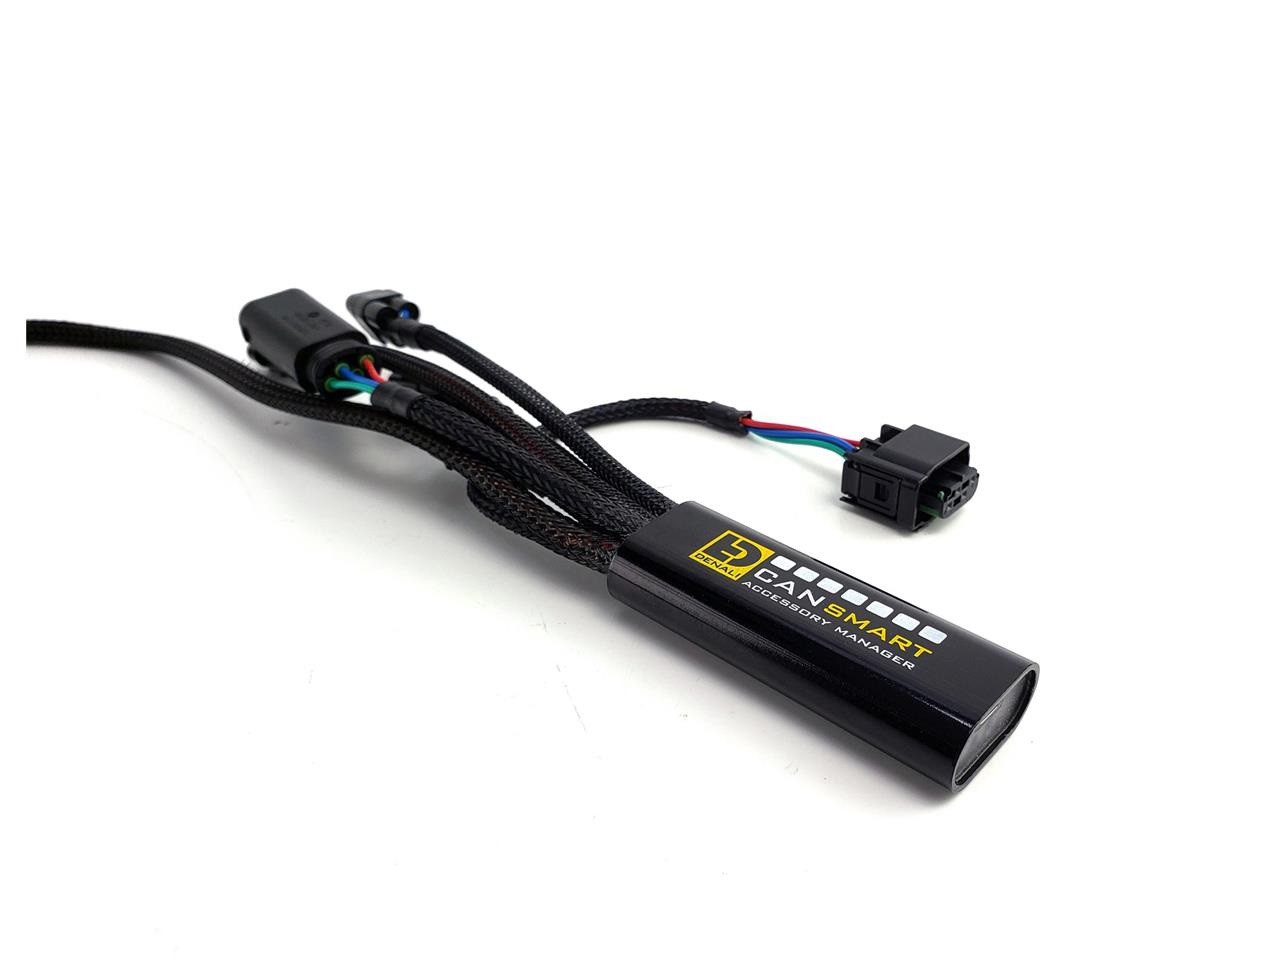 Faisceau CANSMART Plug-N-Play GEN II pour Feux Additionnel BMW R 1200 RT (14-18)